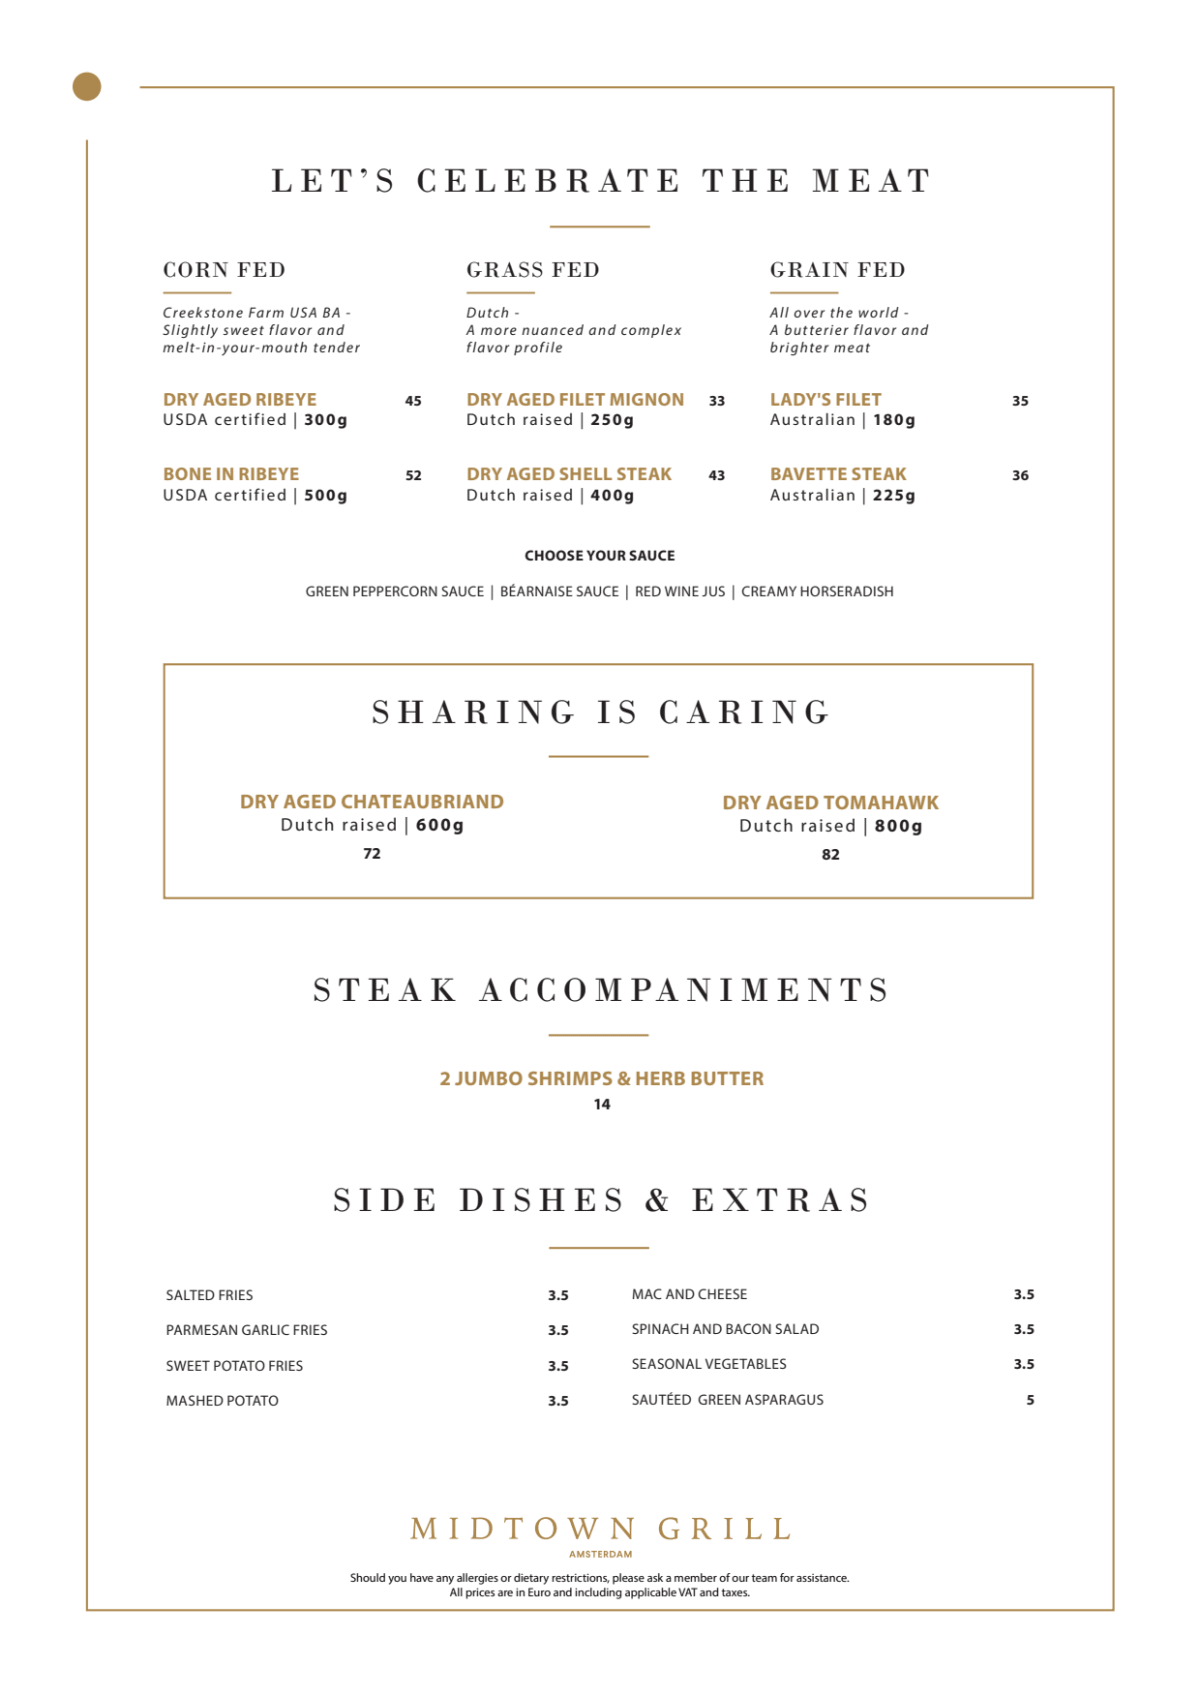 Midtown Grill (Marriott Hotel) menu